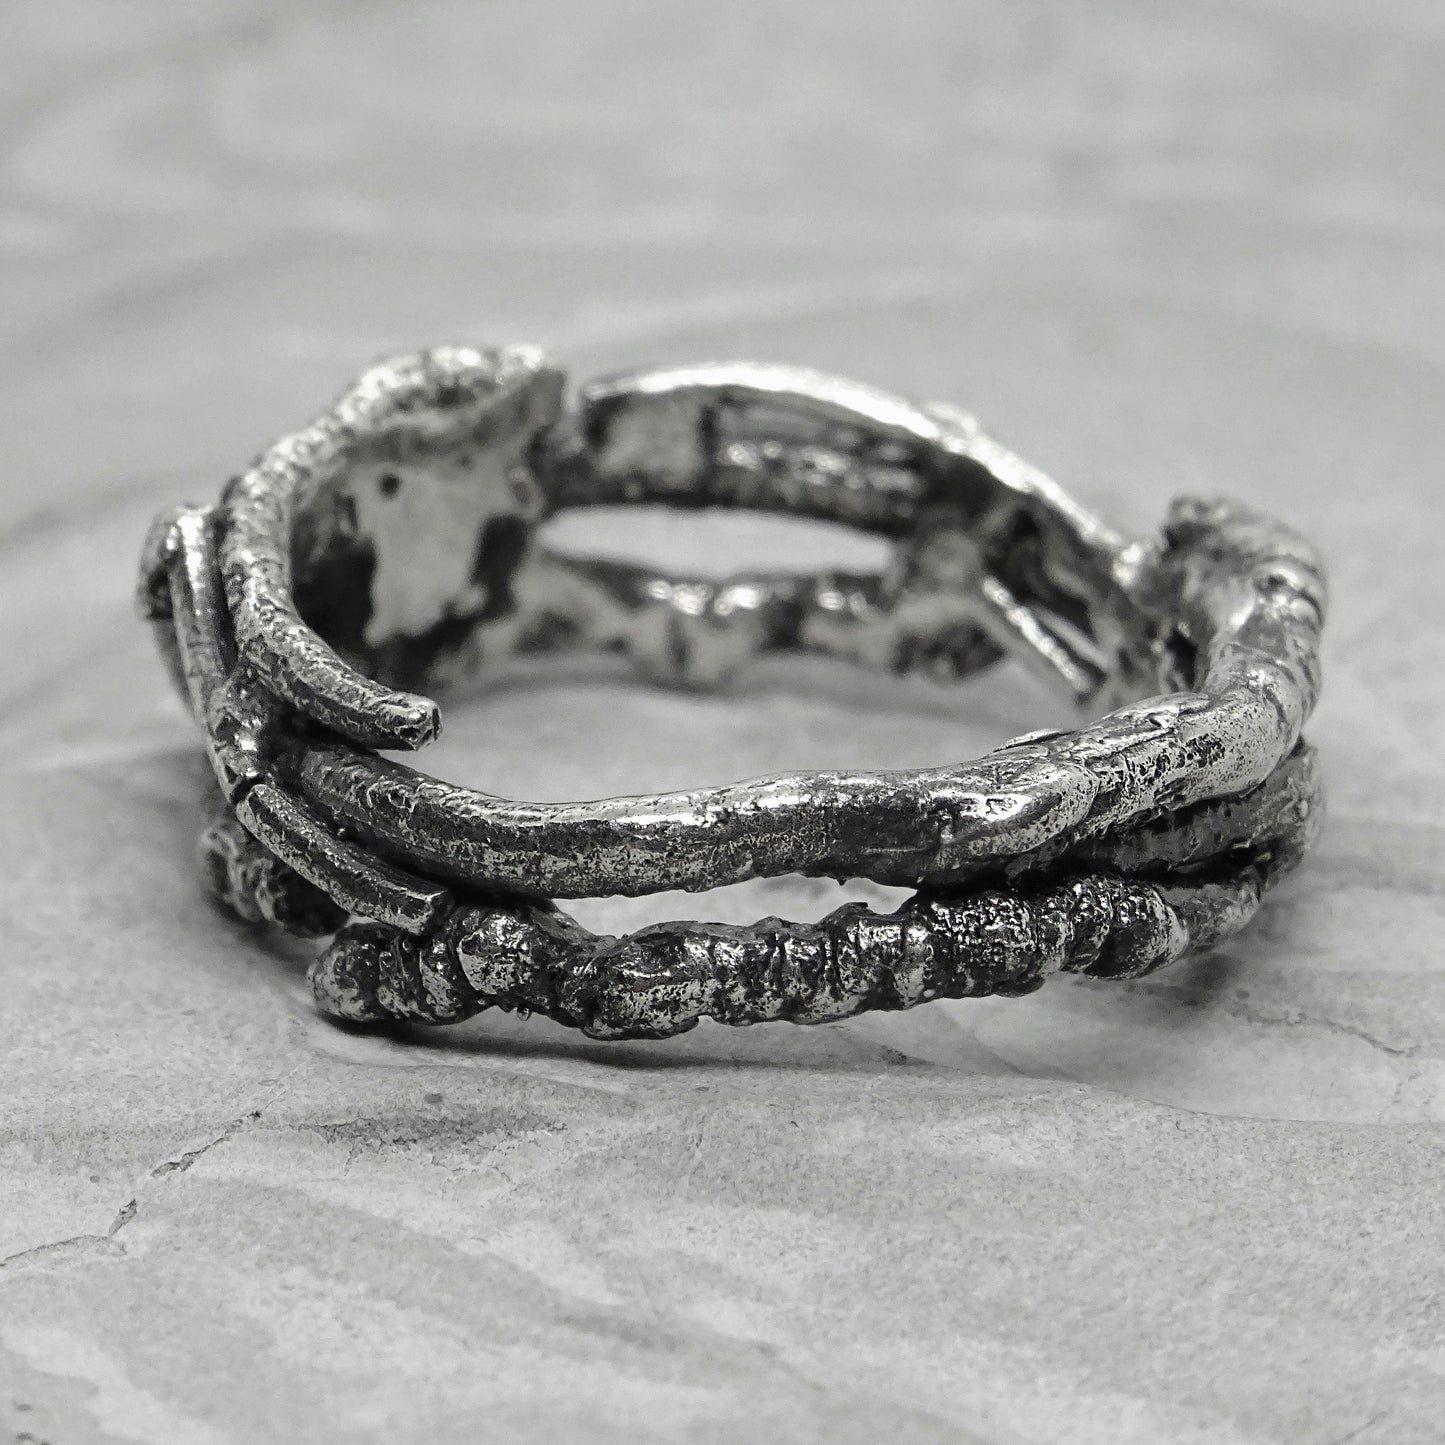 Brashwood ring- lightweight ring made of interlacing textured stripes Lightweight rings Project50g 